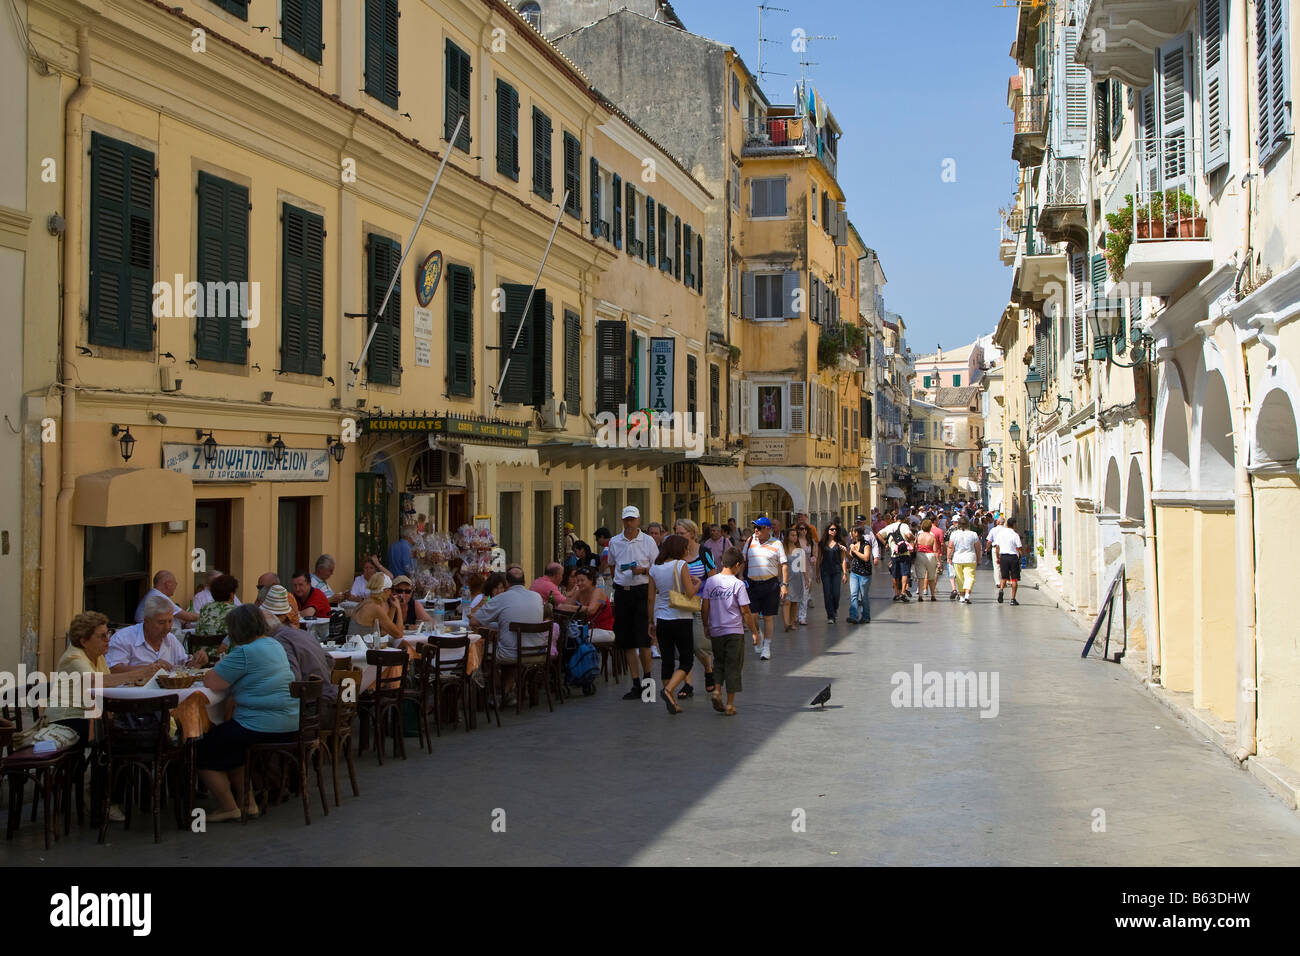 A typical street scene of Corfu town in the old town area, Corfu, Greece Stock Photo